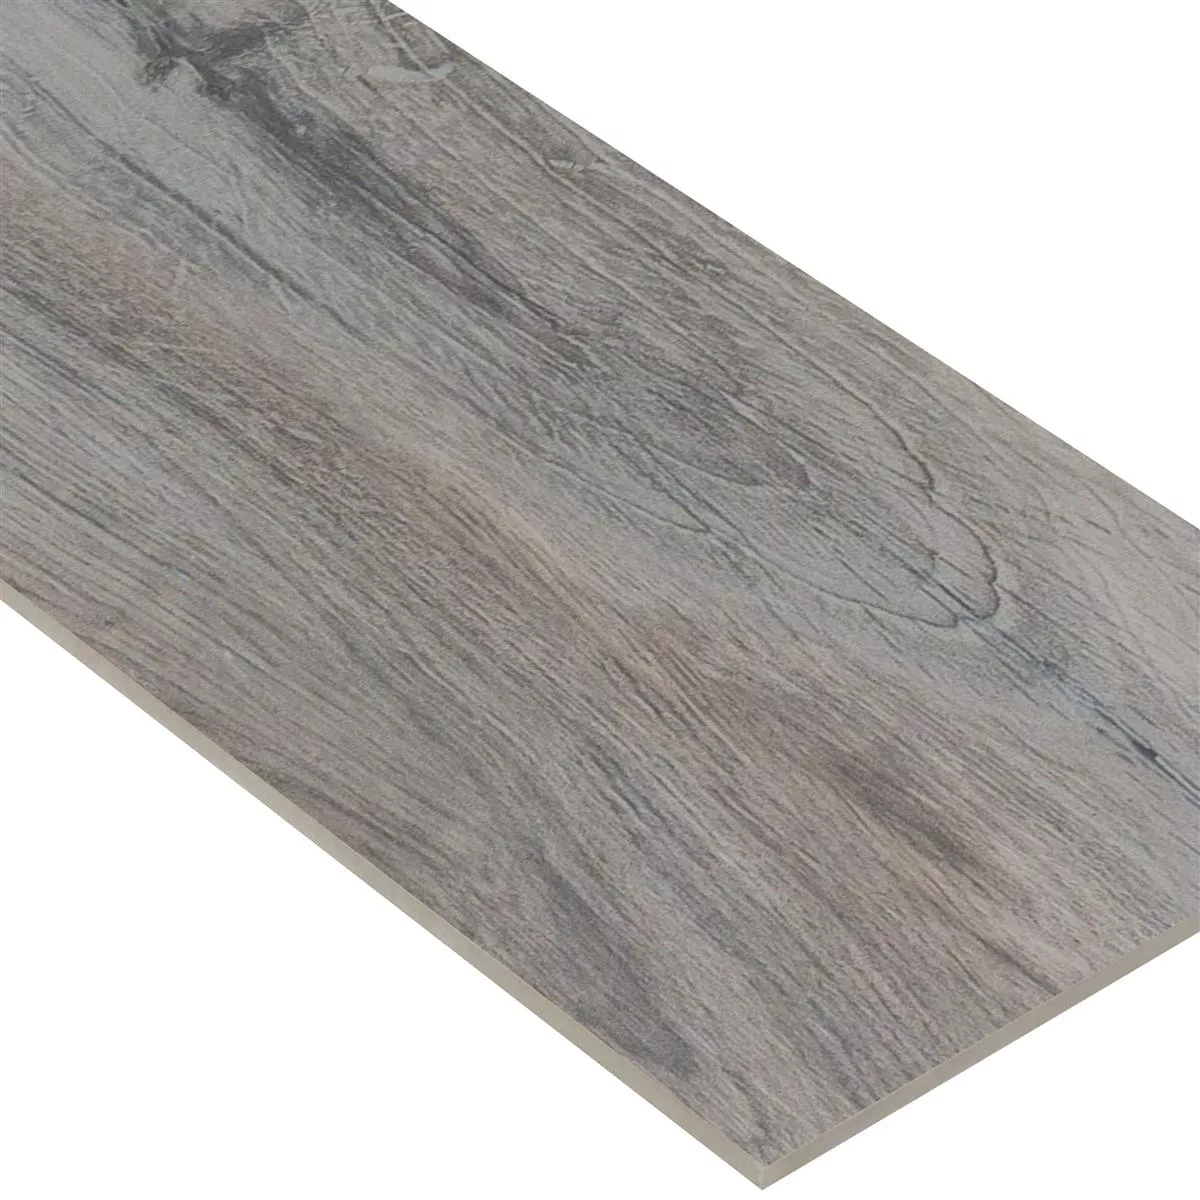 Sample Floor Tiles Wood Optic Fullwood Grey 20x120cm